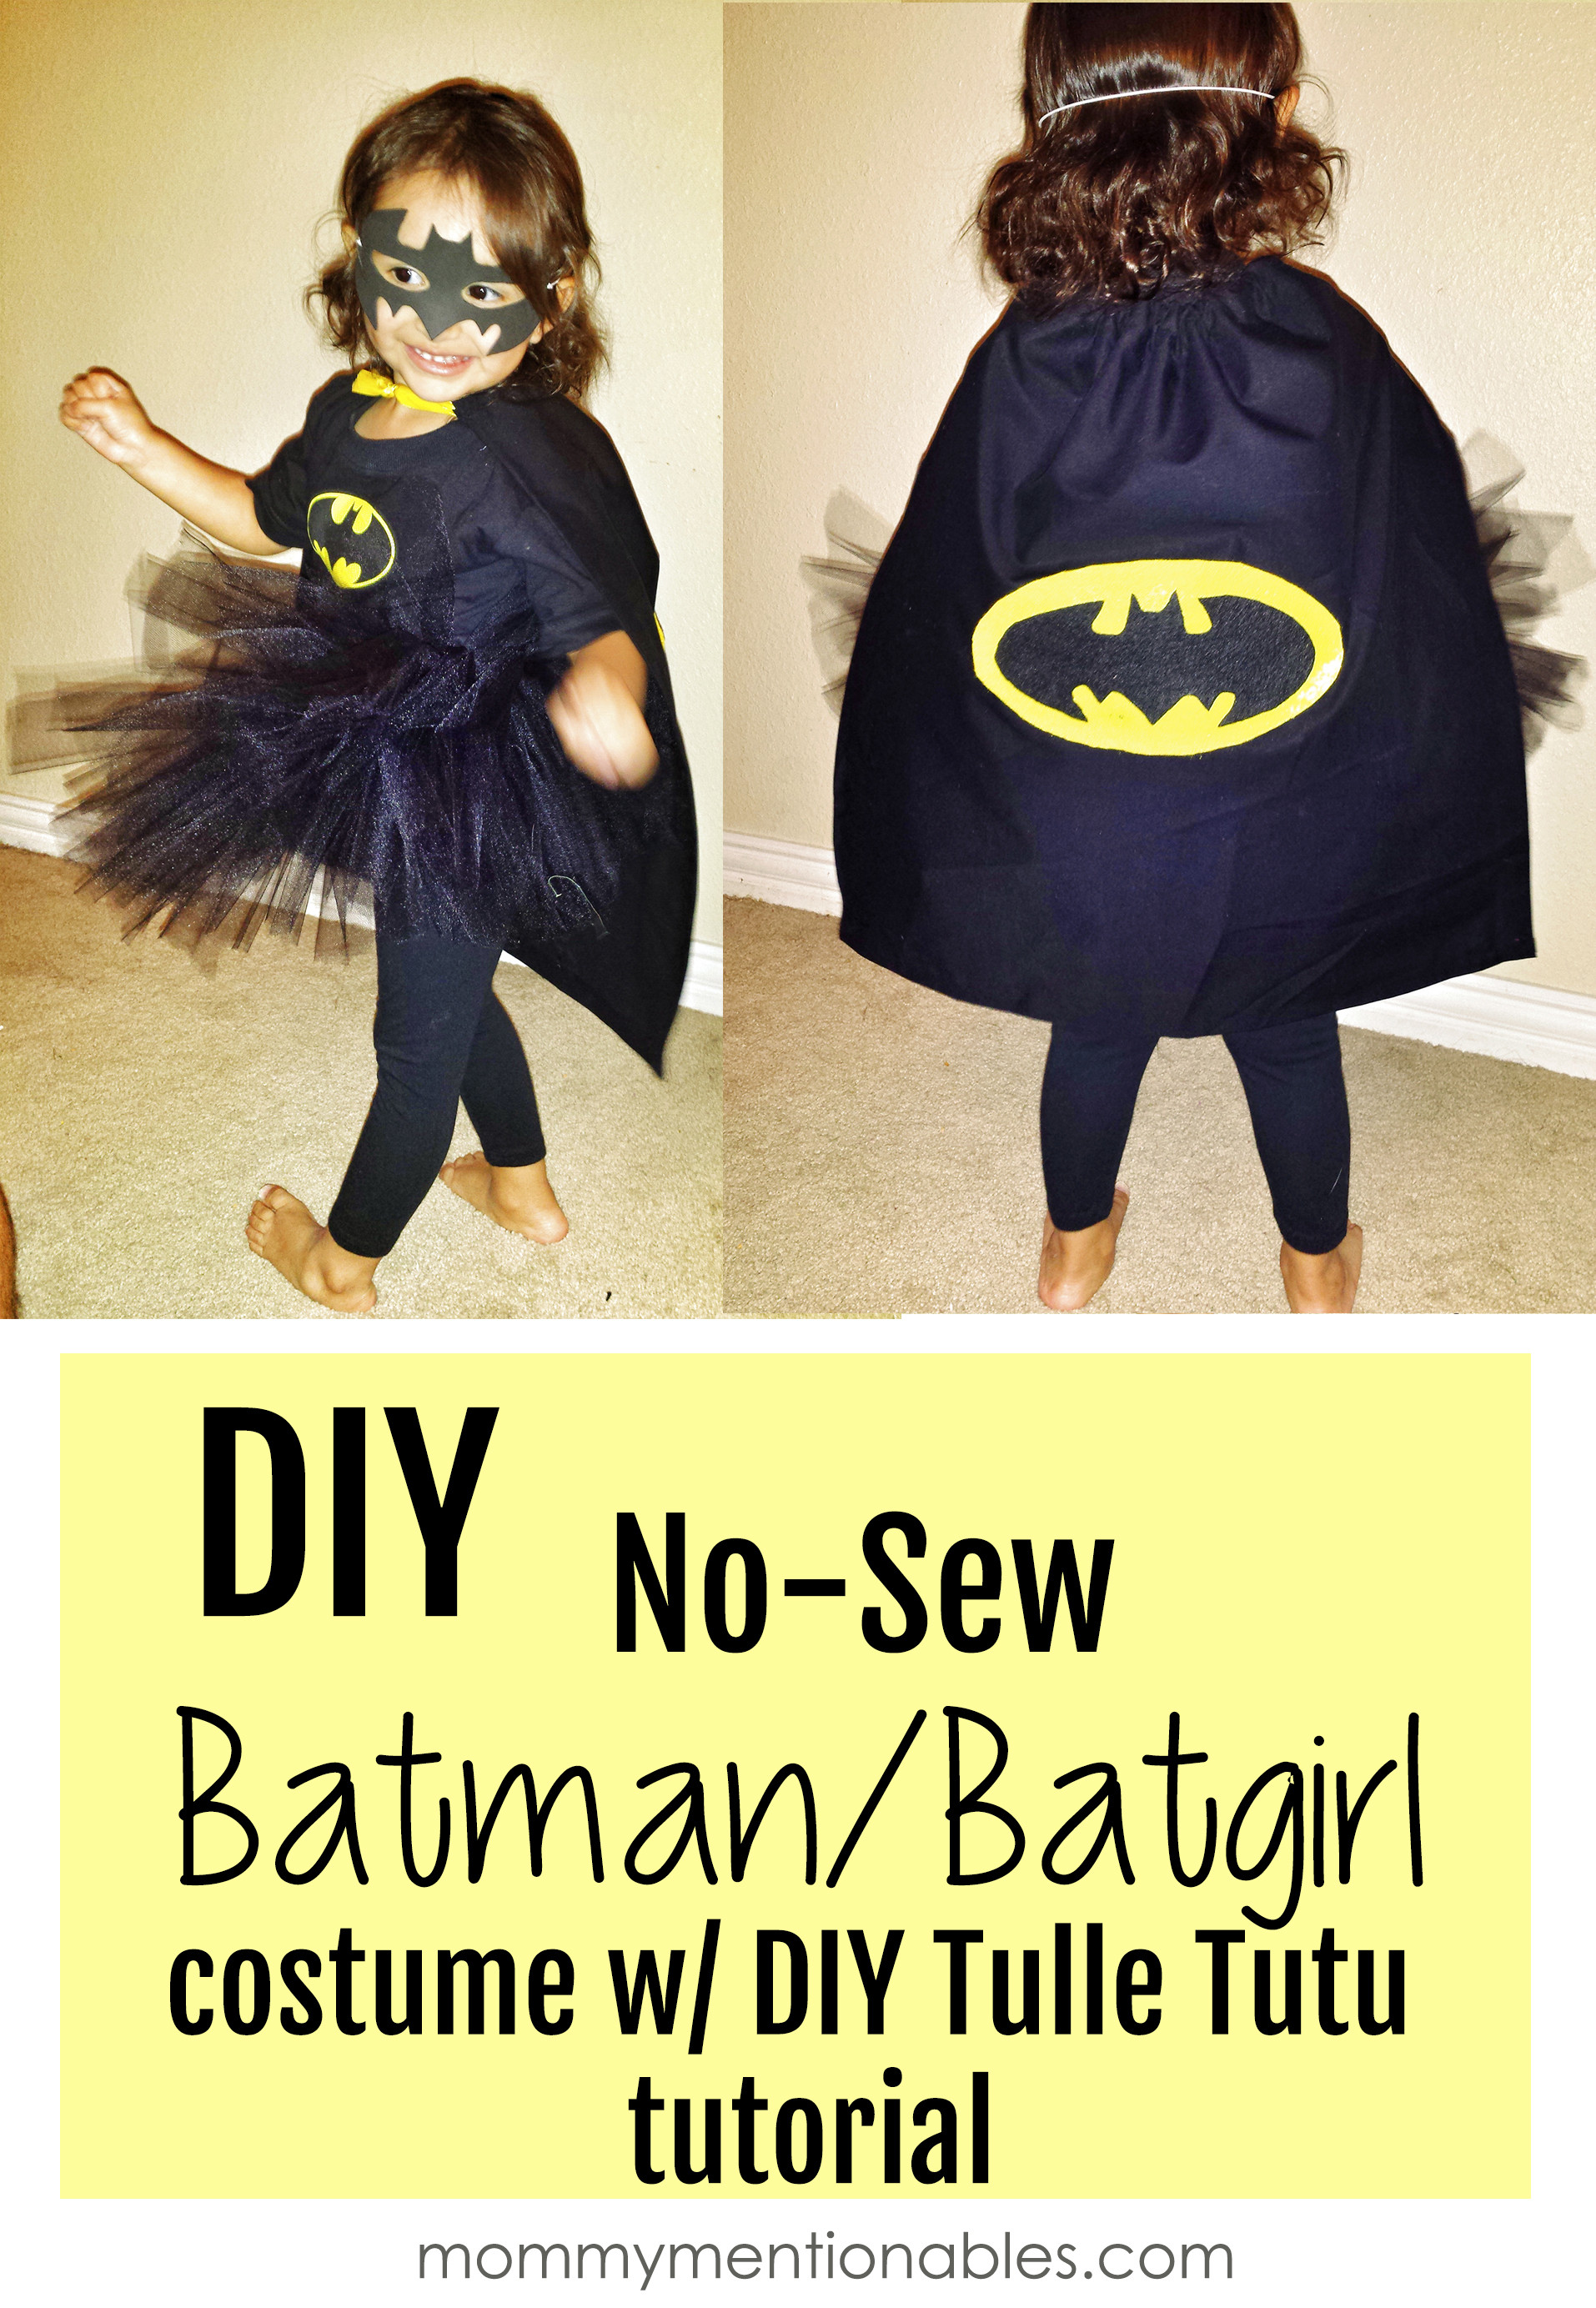 Best ideas about DIY Superhero Costume No Sew
. Save or Pin DIY No Sew Batman Batgirl Costume Now.